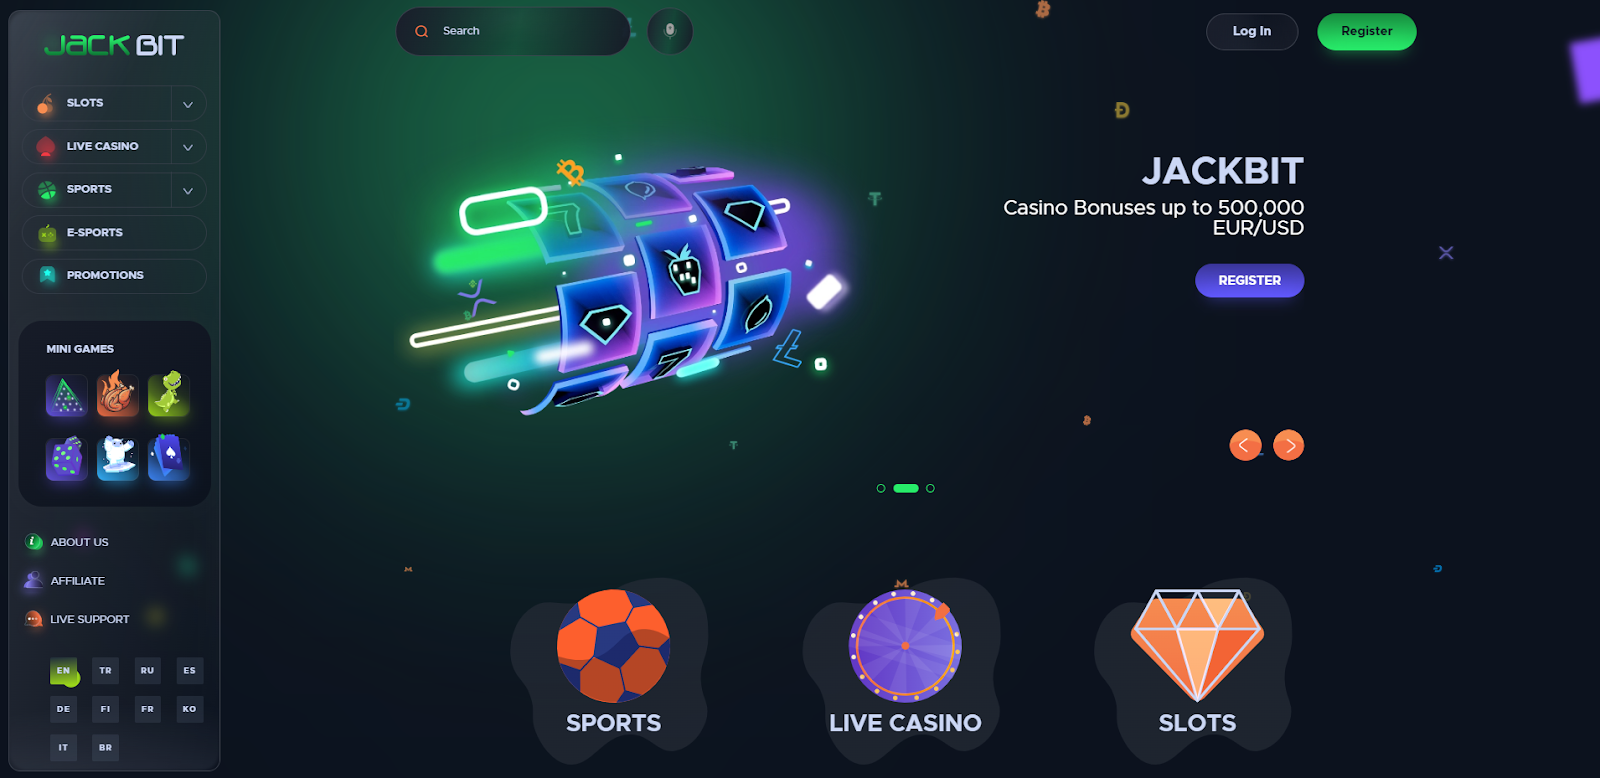 14. Jackbit - Perfect For Mobile - Casino Bonuses Up To 5,000 Euro/Usd